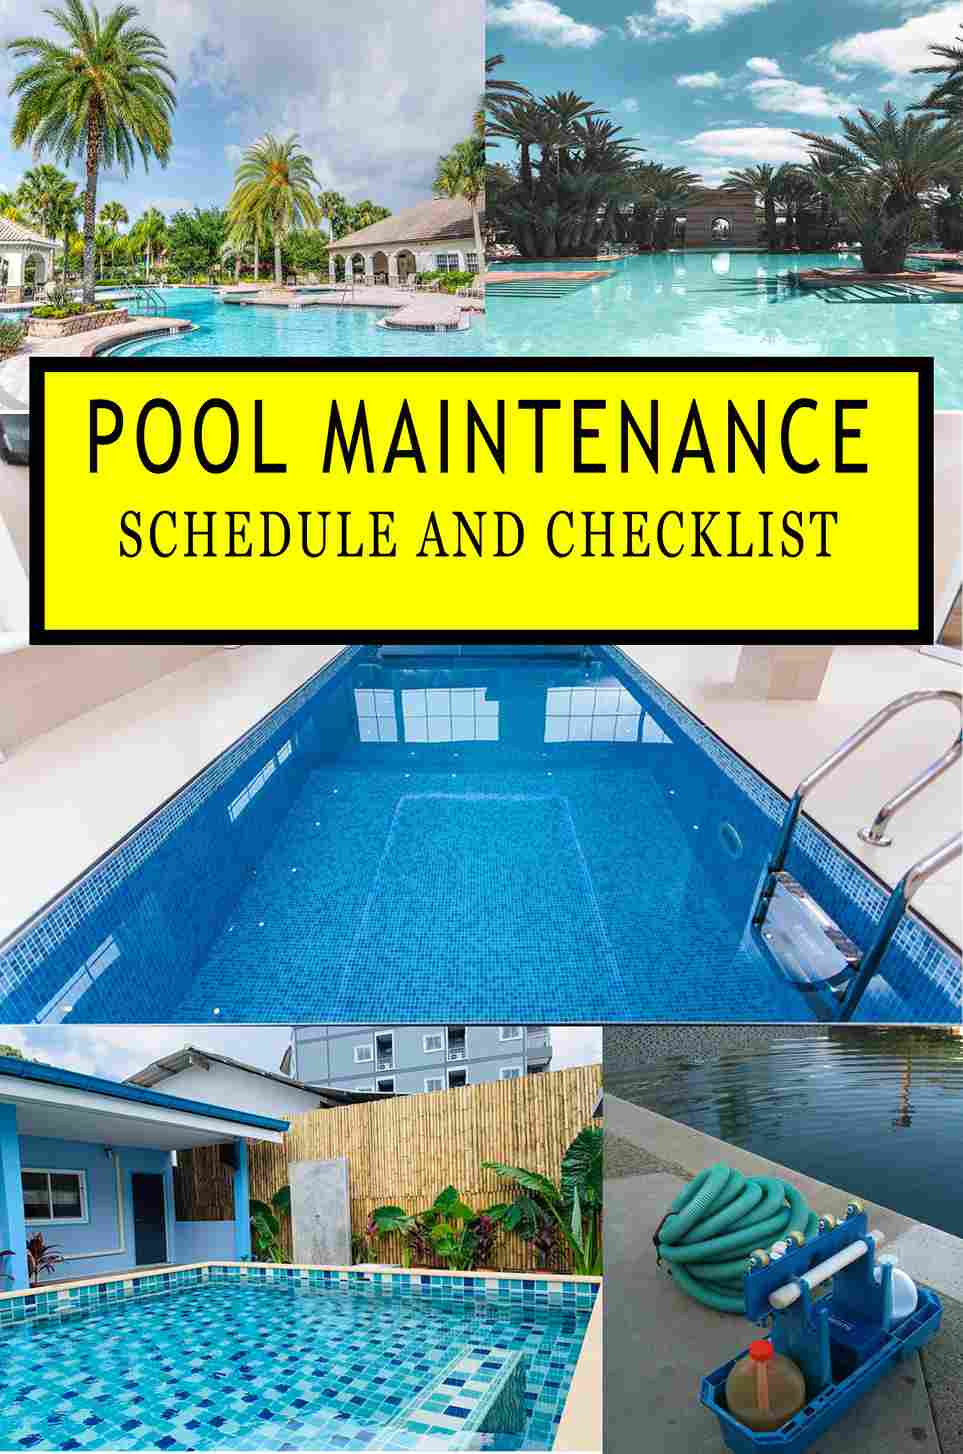 Pool Maintenance Schedule and Checklist